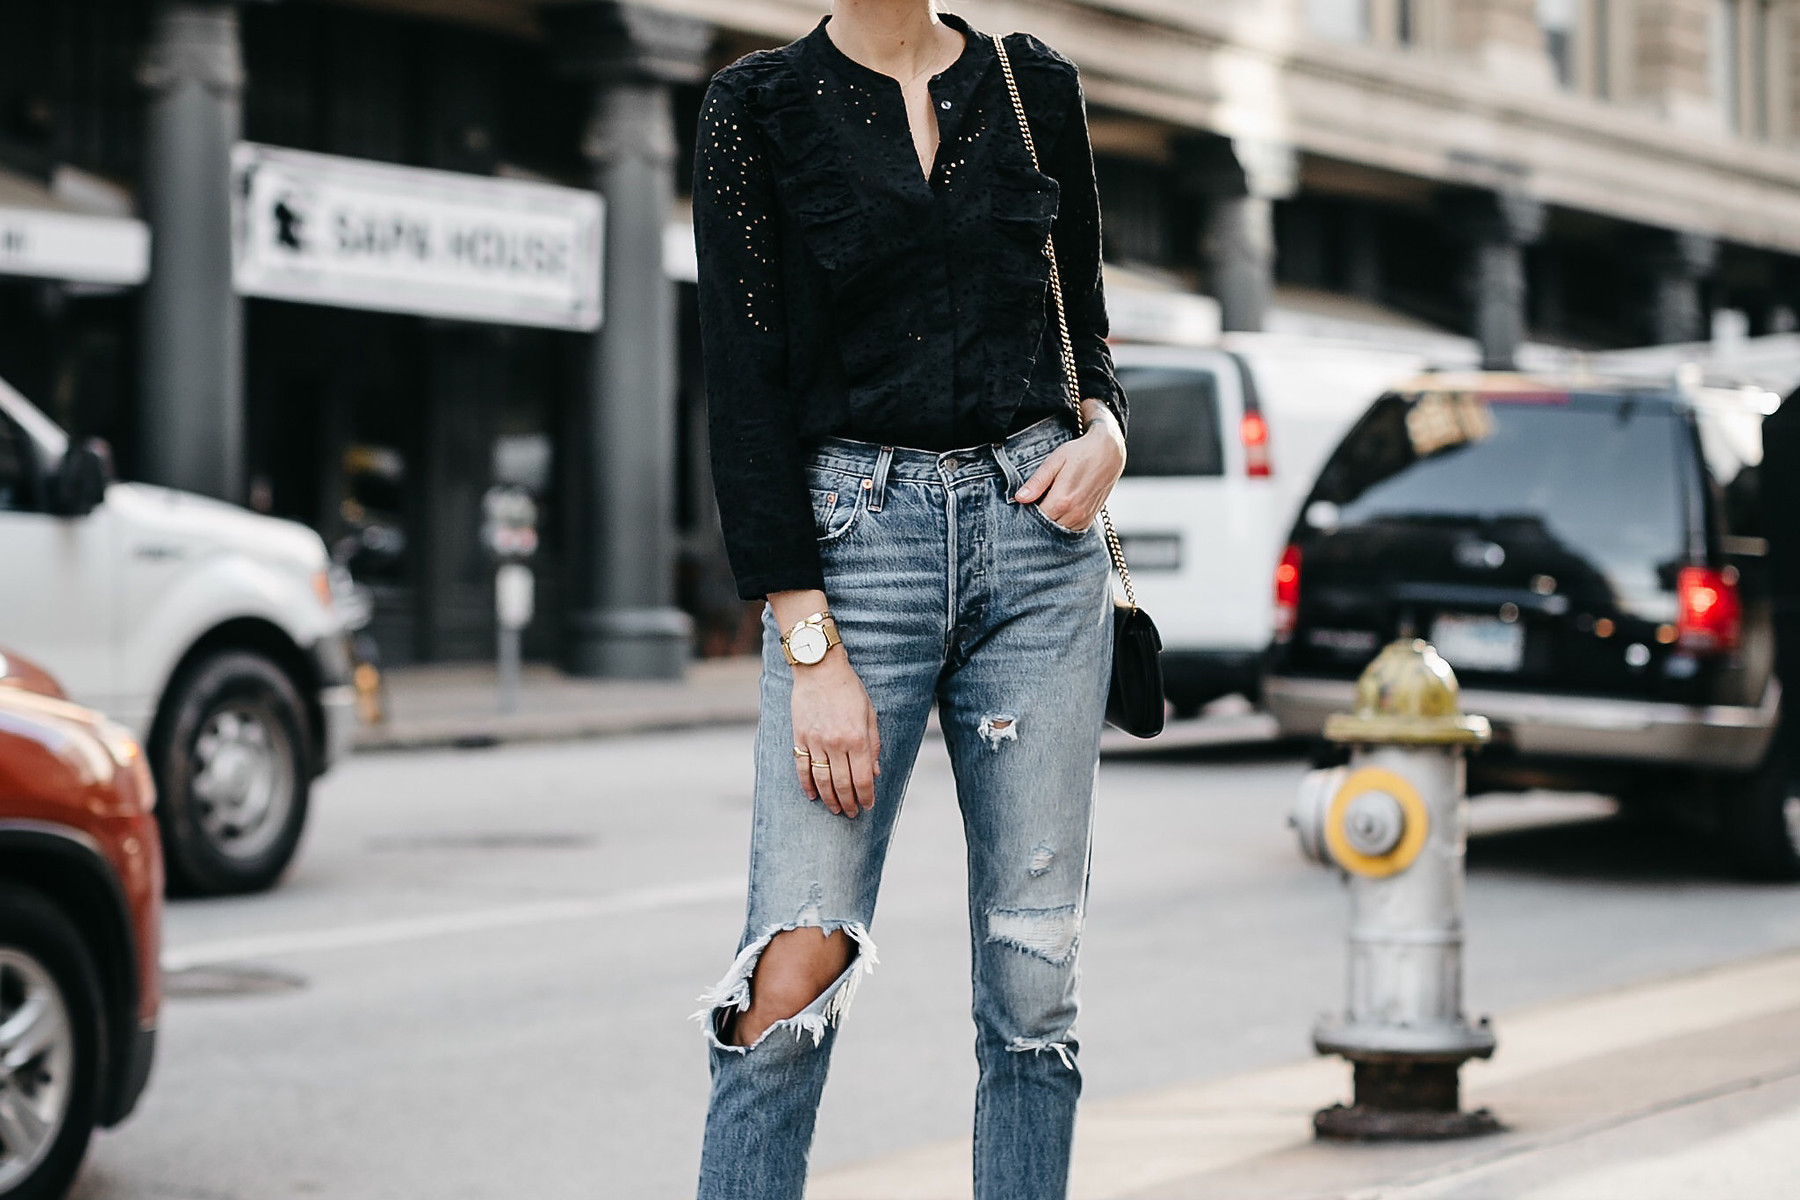 Madewell Black Eyelet Blouse Denim Ripped Jeans Fashion Jackson Dallas Blogger Fashion Blogger Street Style